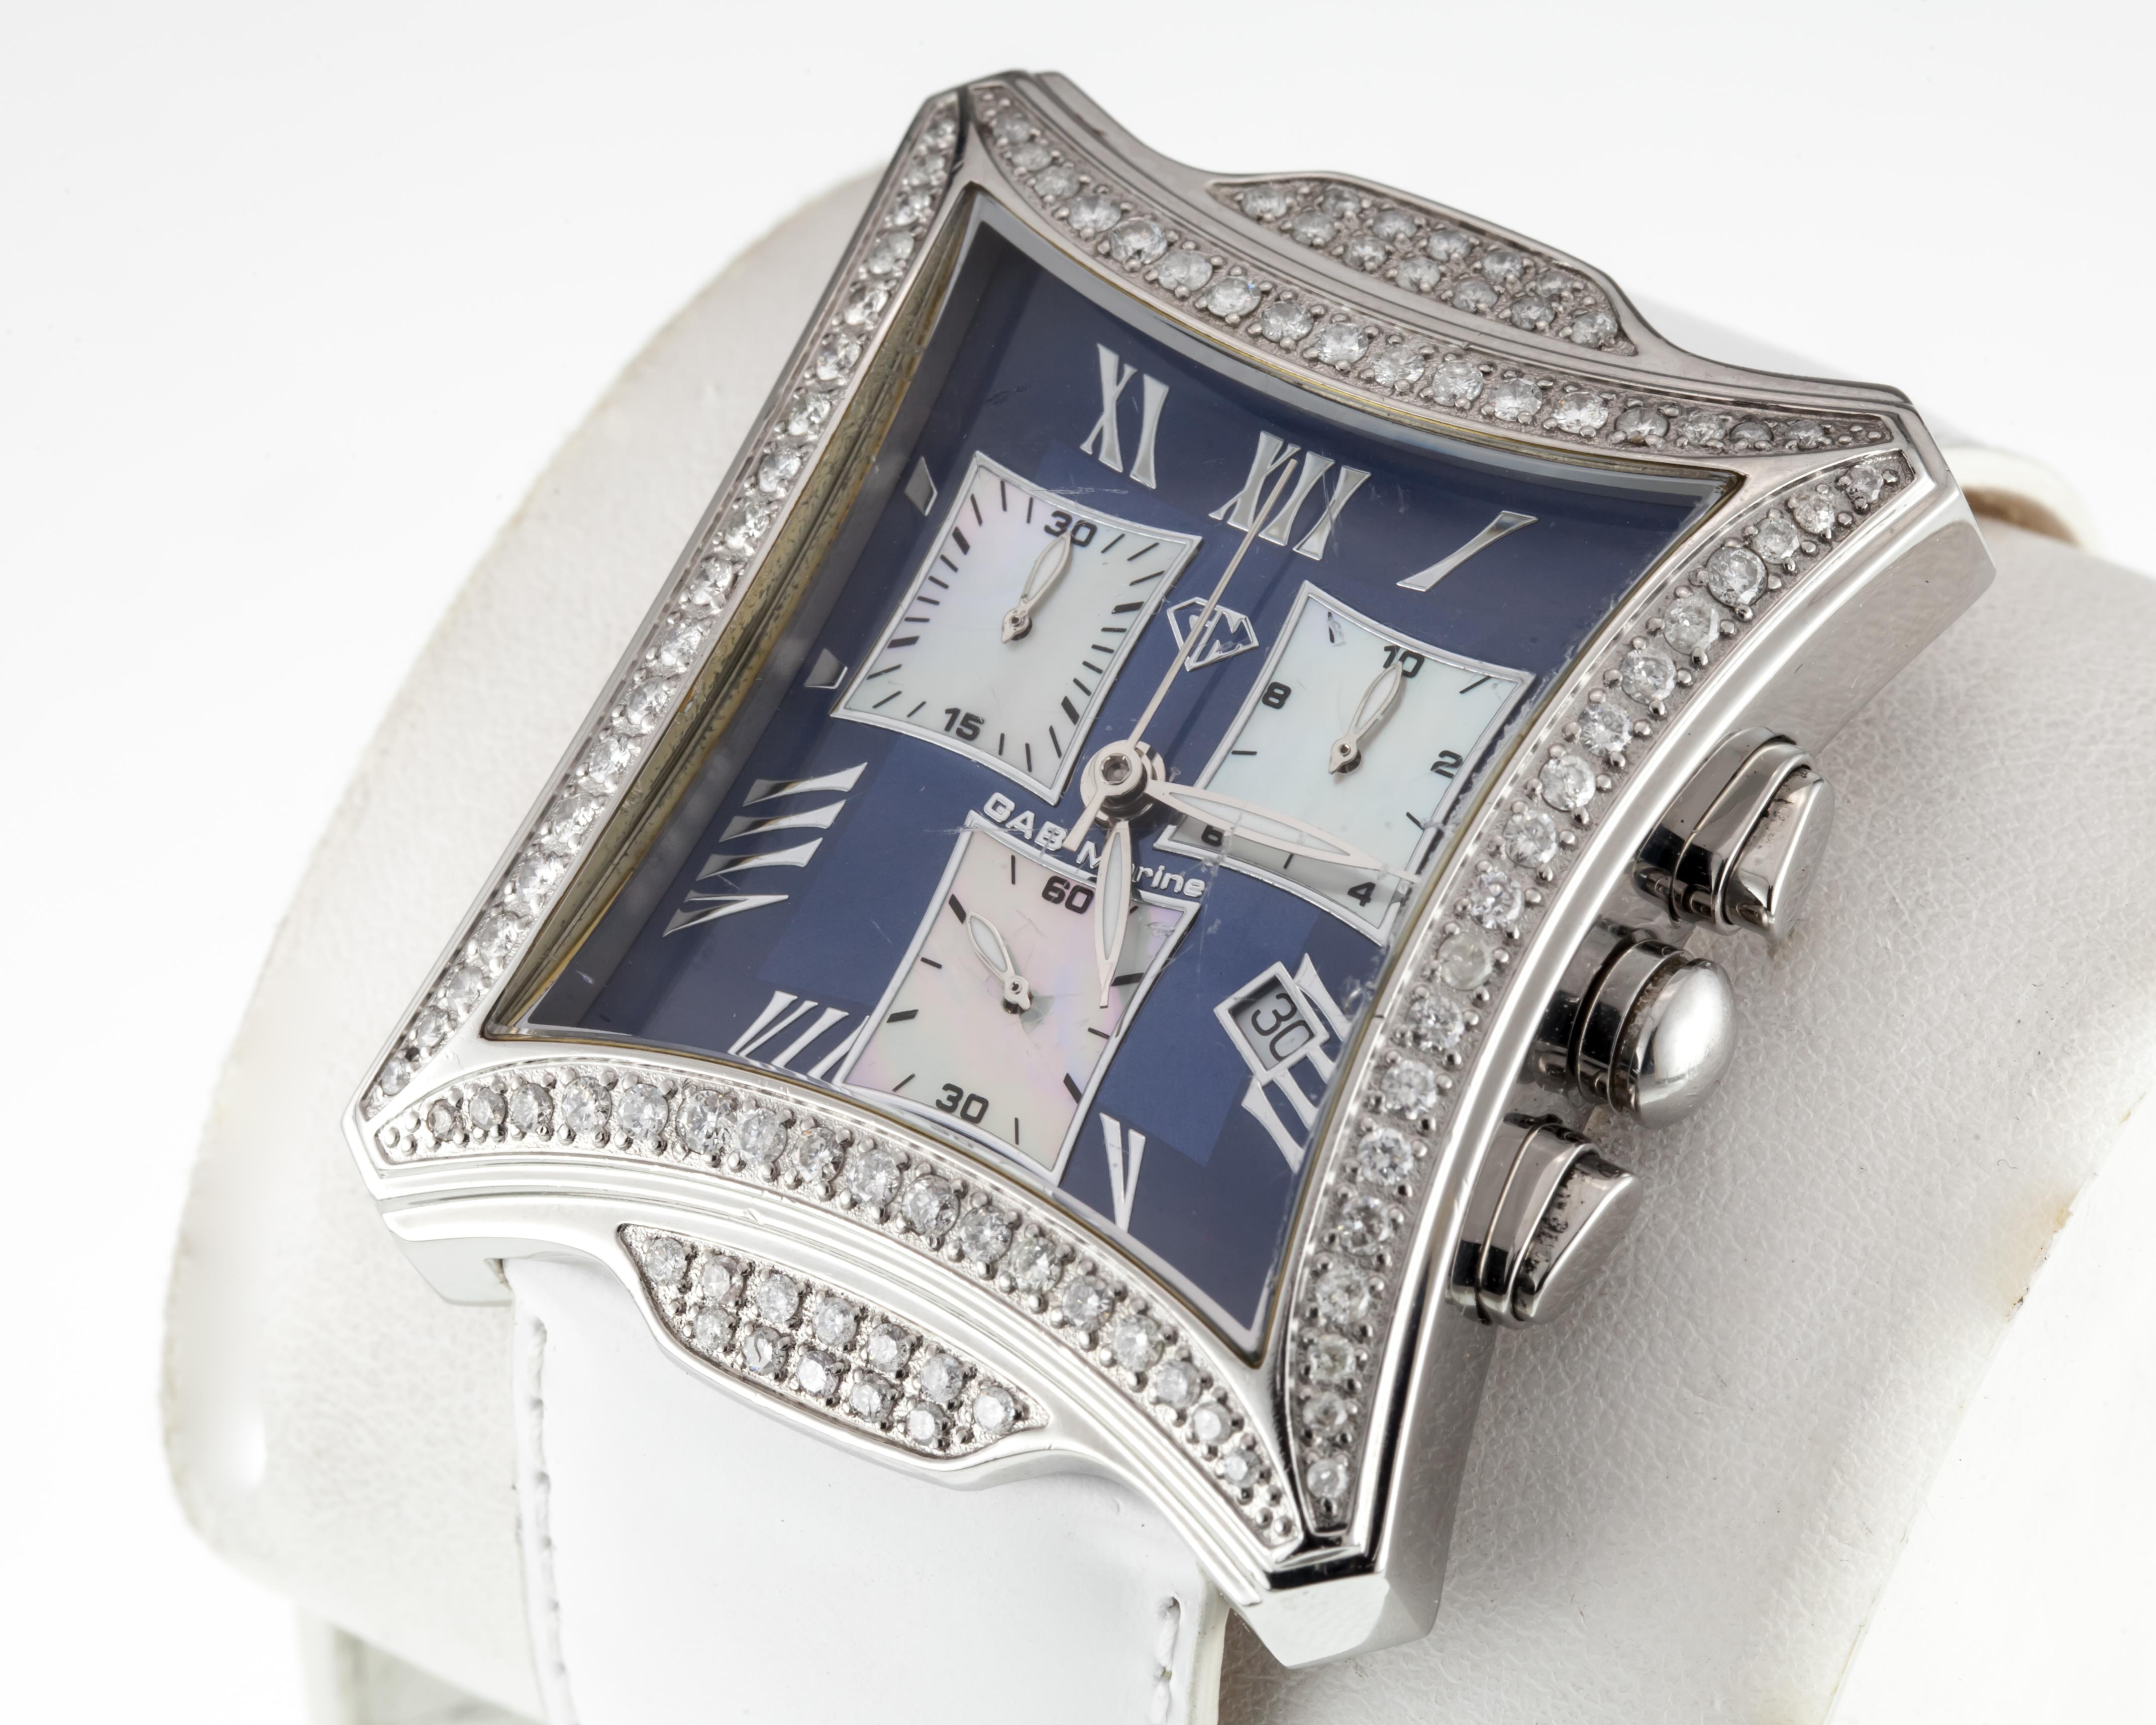 Gab Marine Stainless Steel Diamond Large Women's Chronograph Quartz Watch
Movement #TA010067
Case #TA010067

Stainless Steel Case w/ Diamond Bezel and Accents
36 mm Wide (39 mm w/ Crown)
47 mm Long
Lug-to-Lug Width = 28 mm
Lug-to-Lug Distance = 47